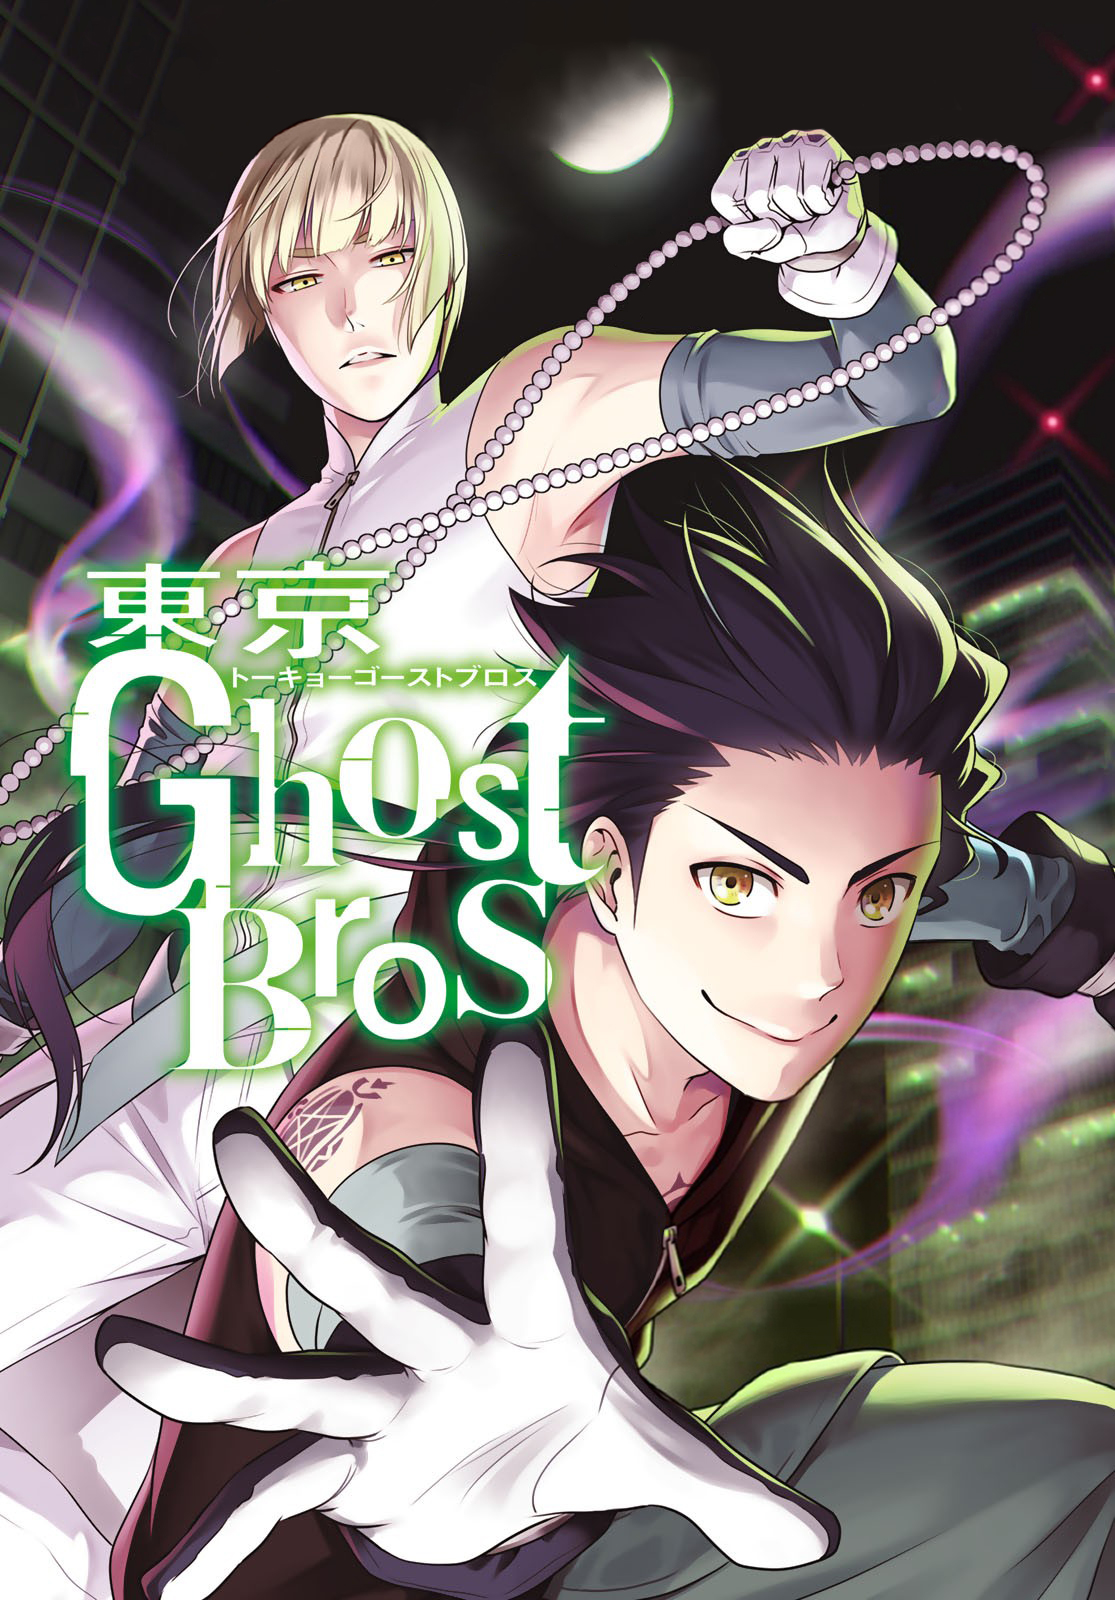 Tokyo Ghost Bros Scan ITA